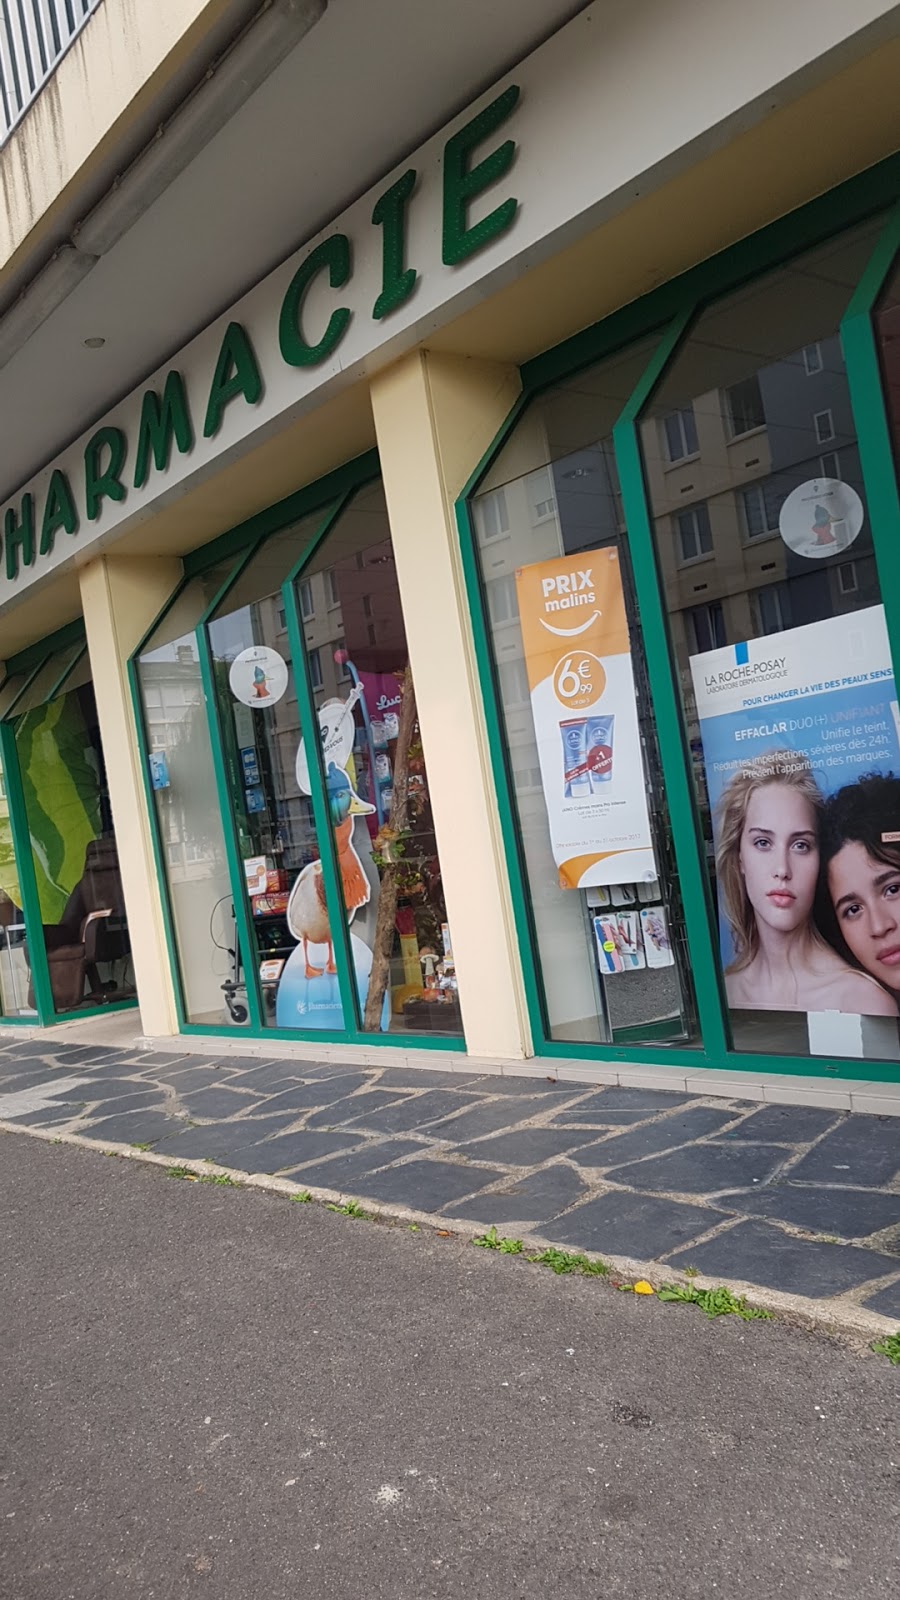 Pharmacie St Michel